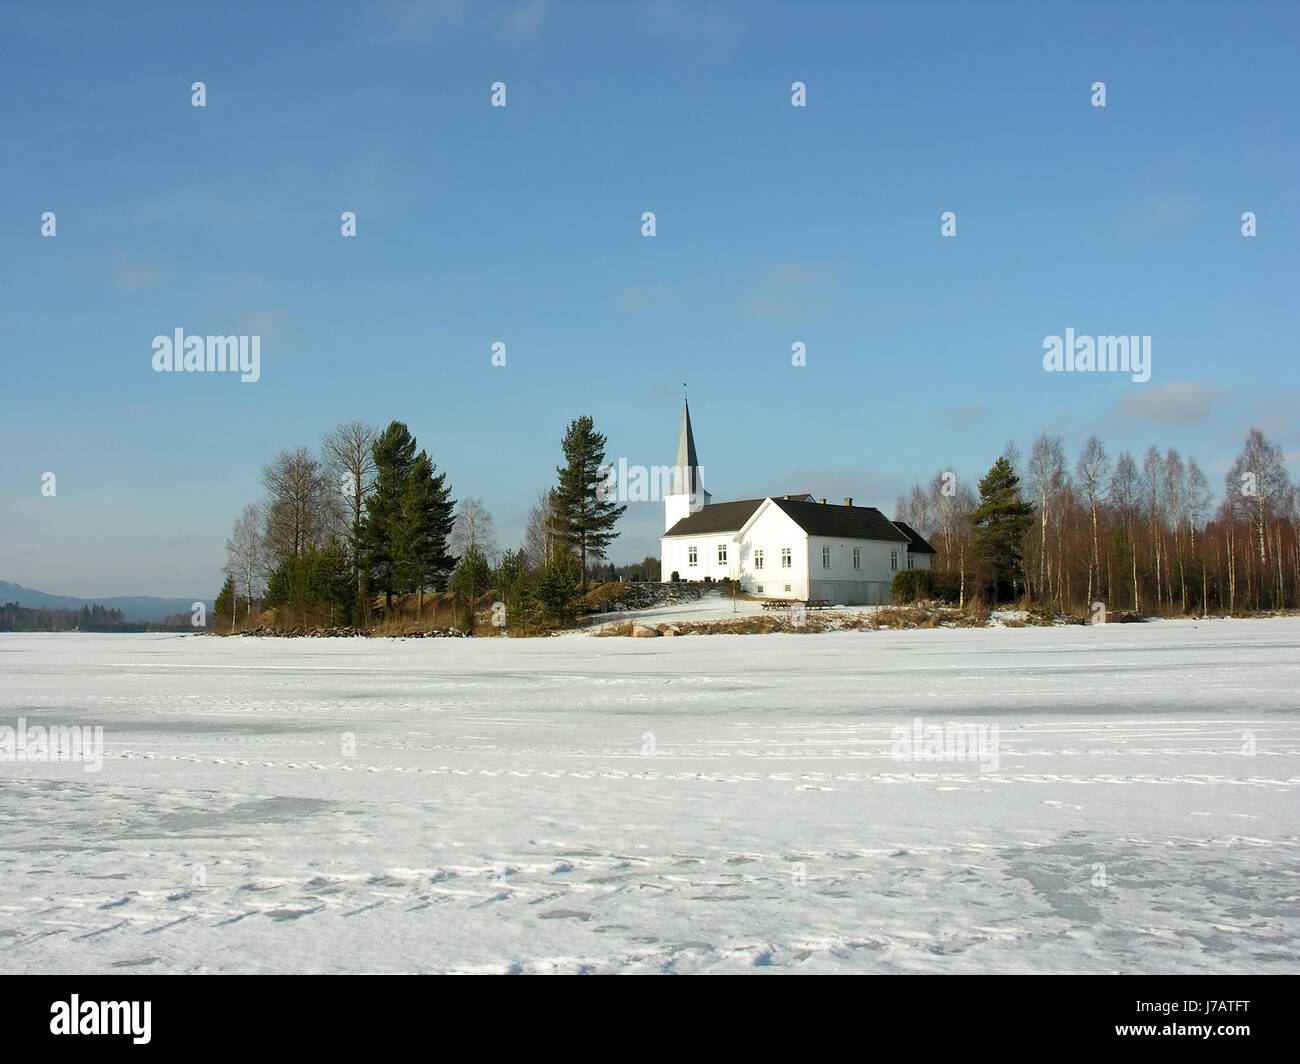 Chiesa Svezia Norvegia paesaggio invernale scandinavia acqua salata oceano mare acqua Foto Stock